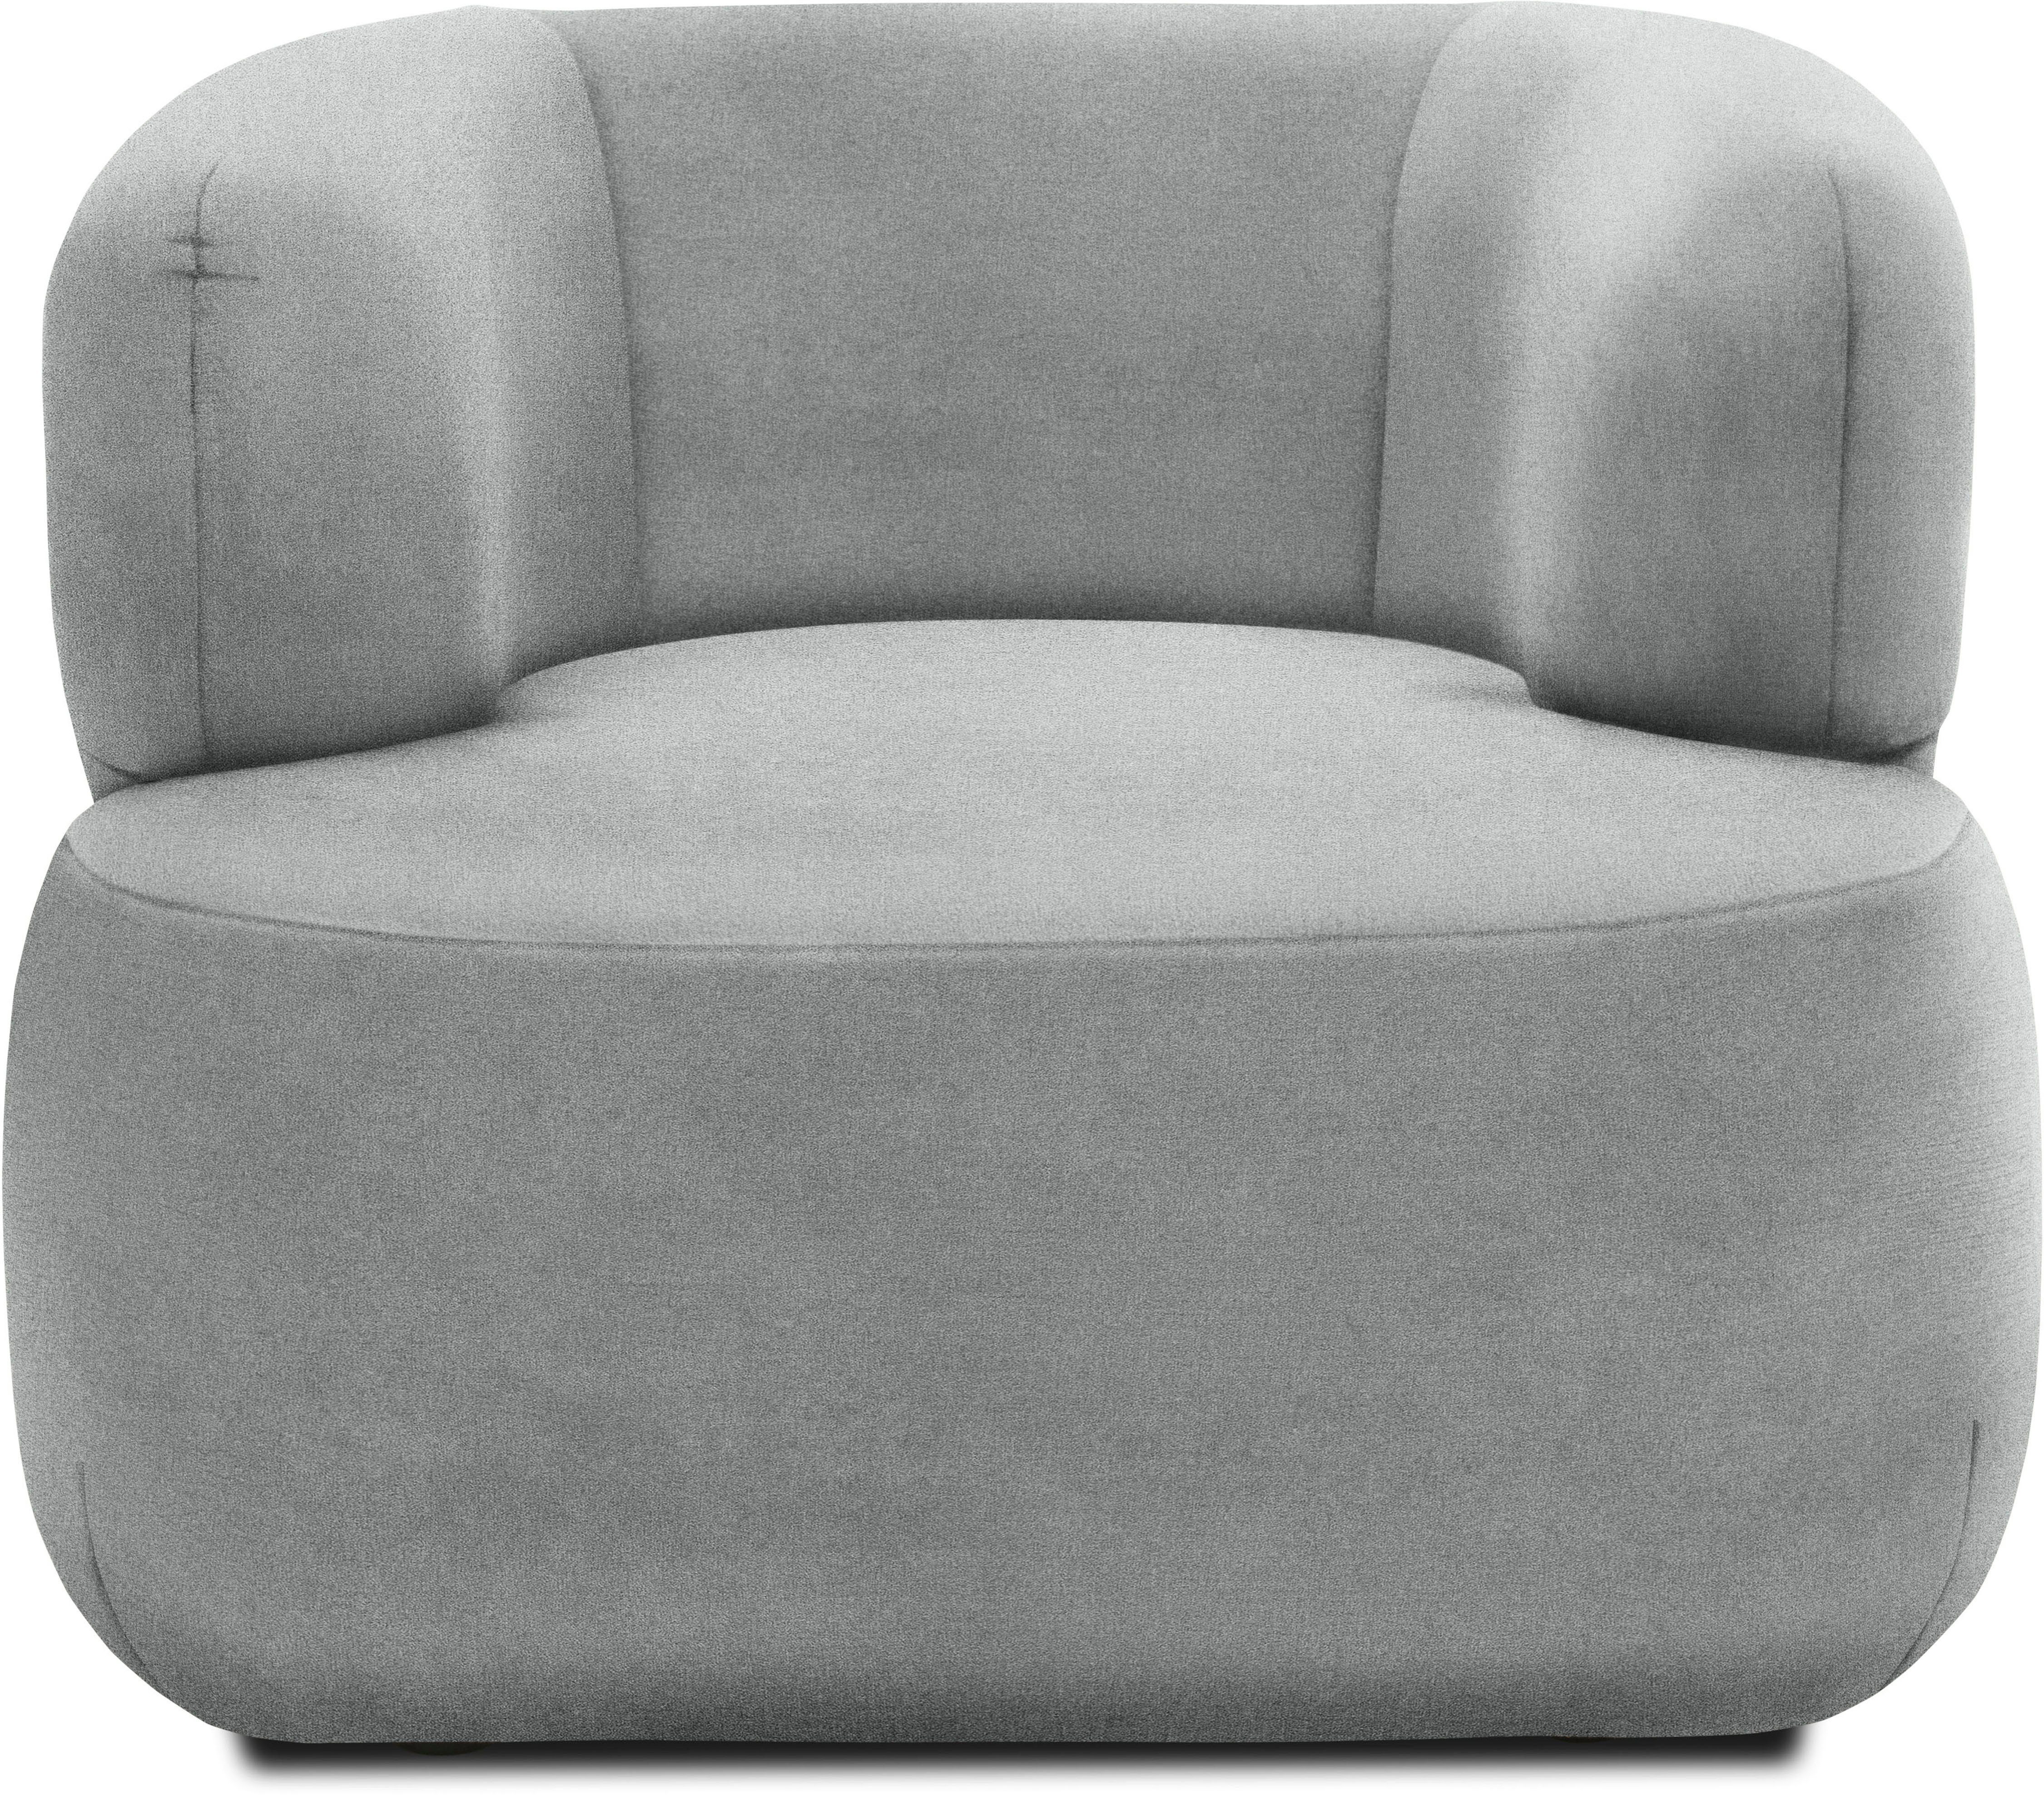 DOMO collection Sessel 800012, Formschöner Polstersessel